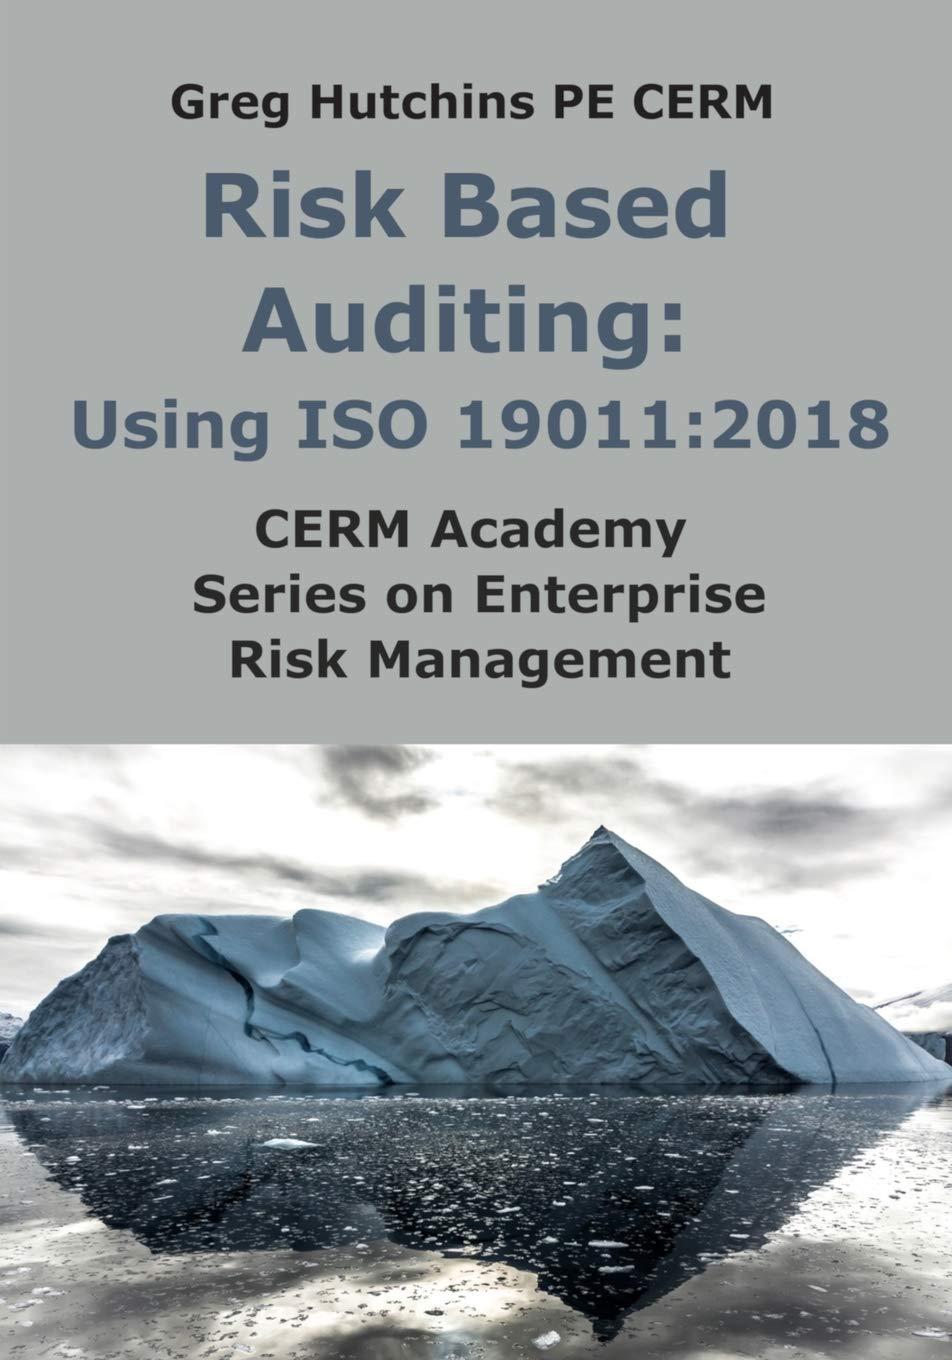 risk based auditing using iso 19011 2018 cerm academy series on enterprise risk management 1st edition greg